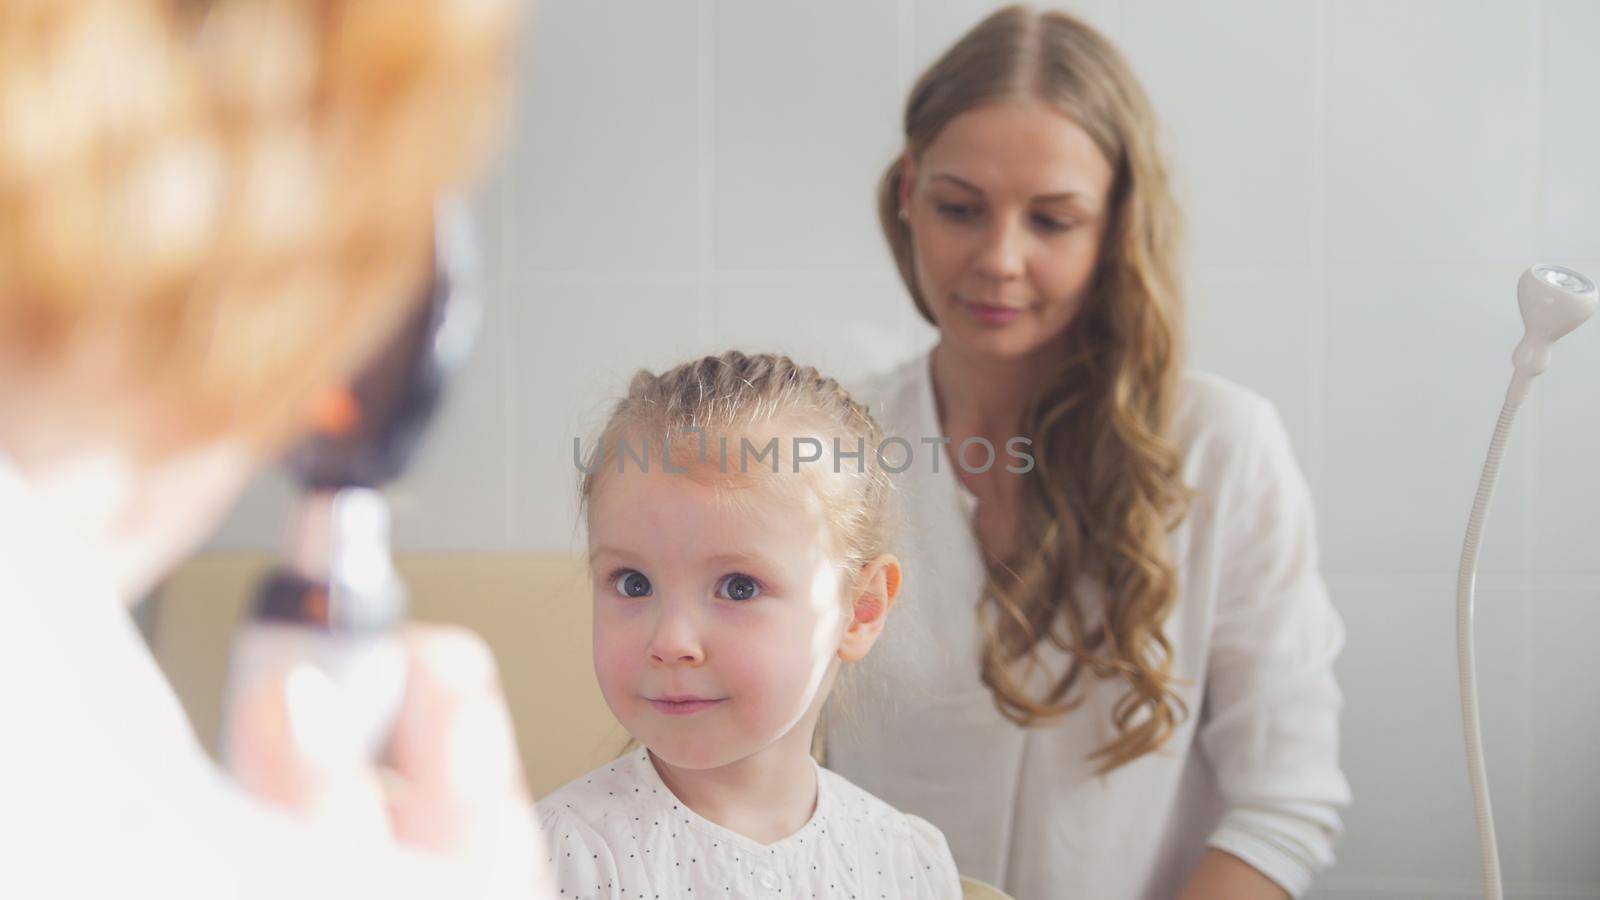 Child's ophthalmology - check up of eyesight - optometrist diagnosis little girl by Studia72